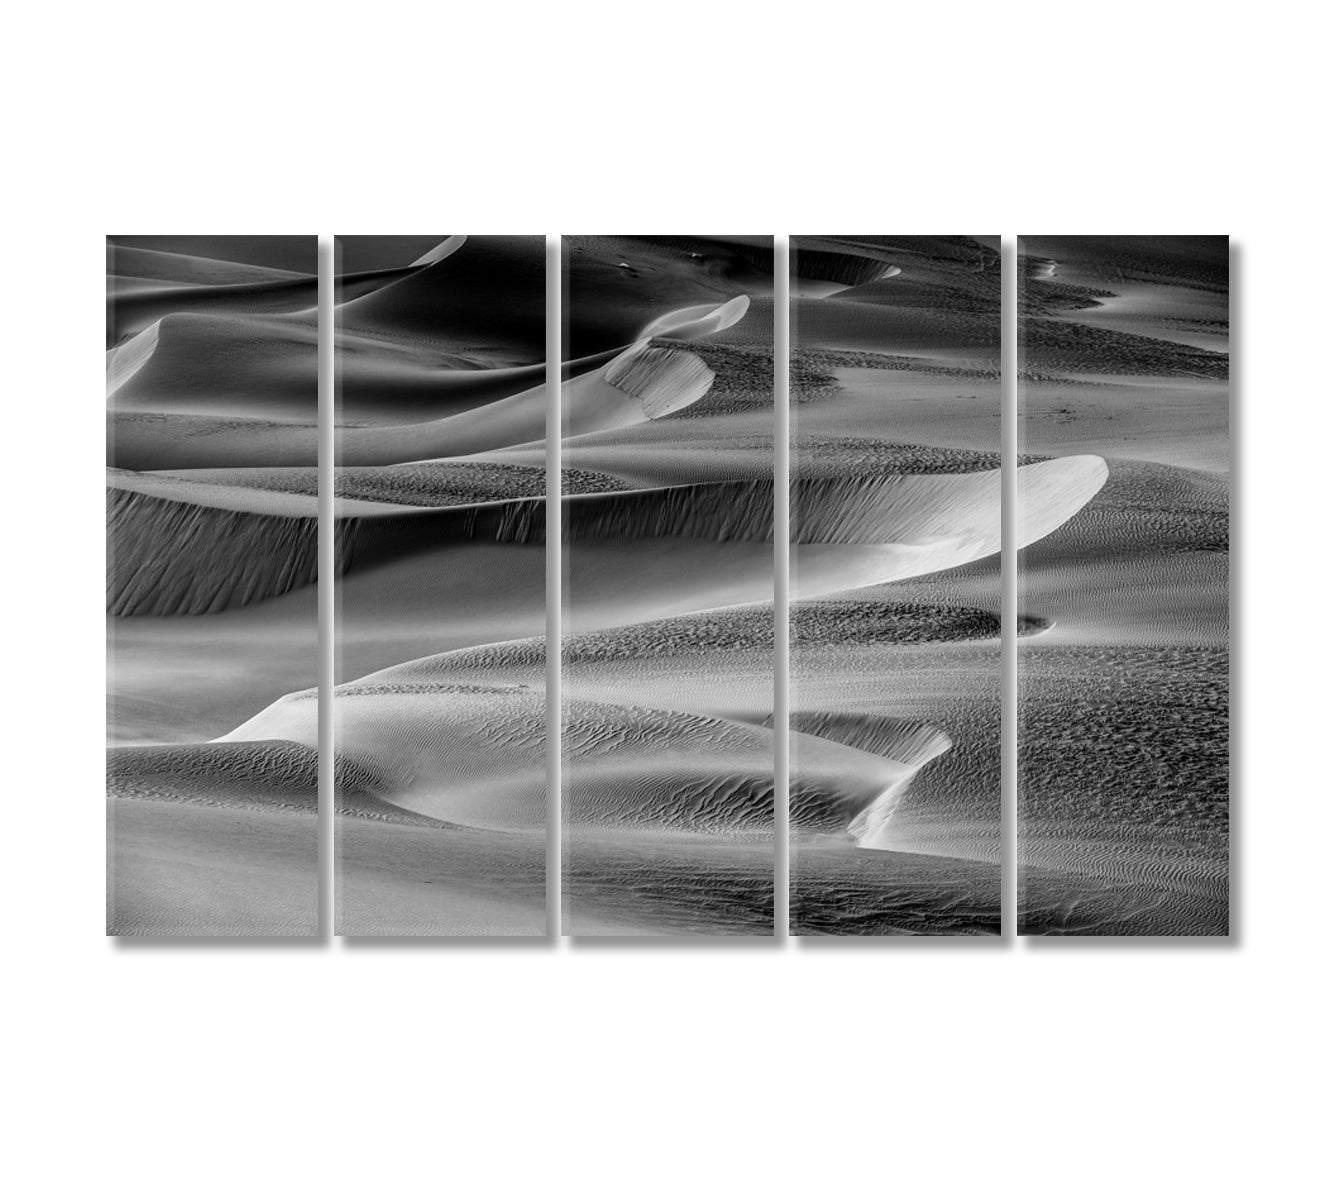 Desert in Black and White Canvas Print-Canvas Print-CetArt-5 Panels-36x24 inches-CetArt